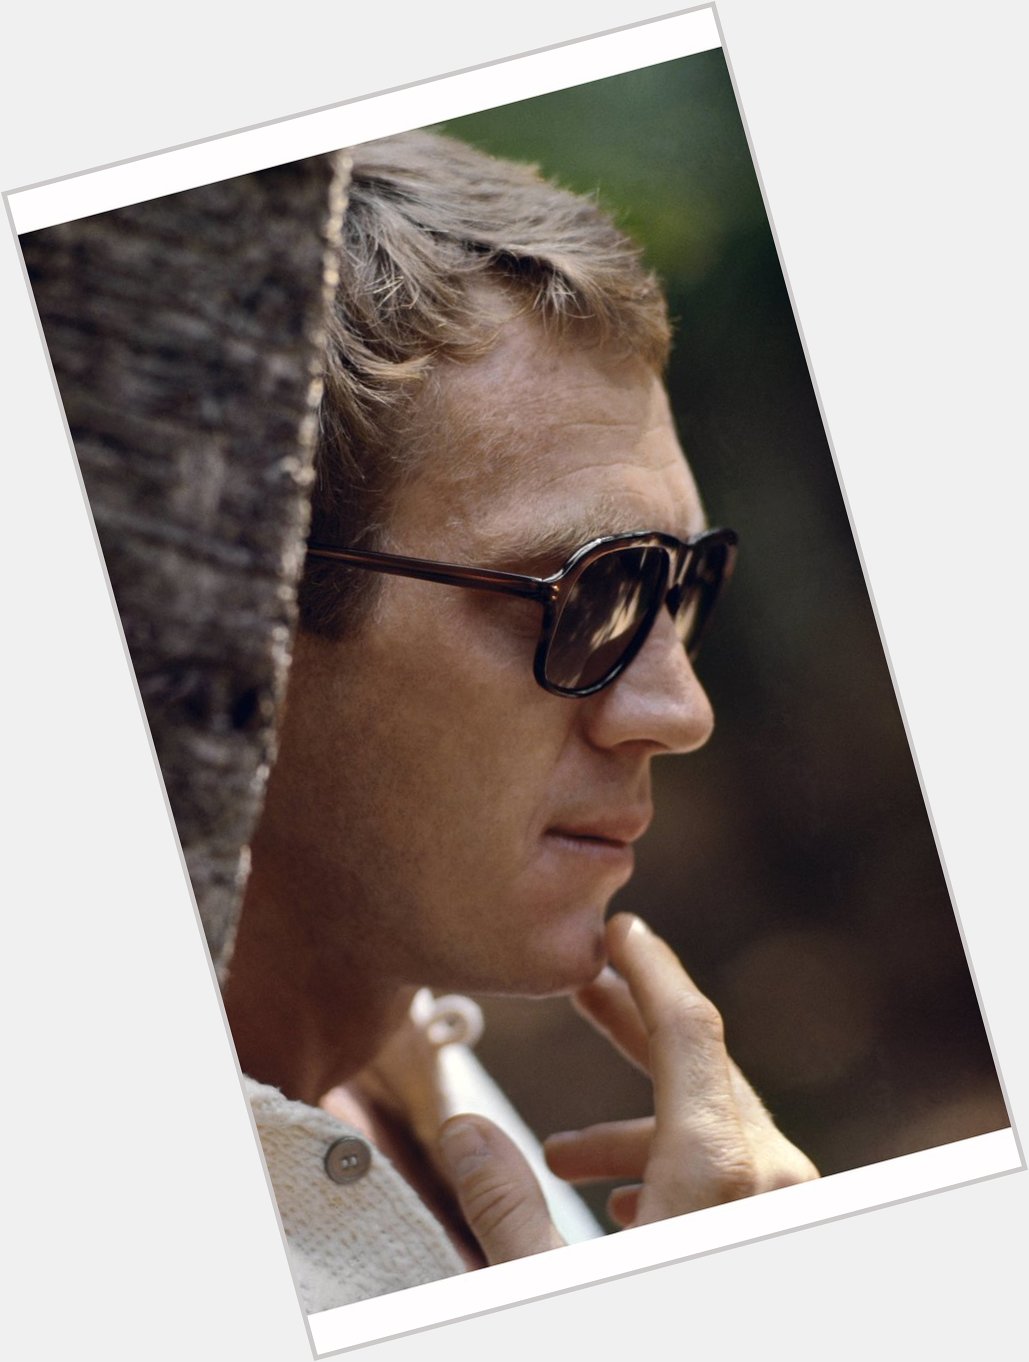 Happy Birthday Steve McQueen 
Photographed by Jean-Marie Périer - Spain, 1969 